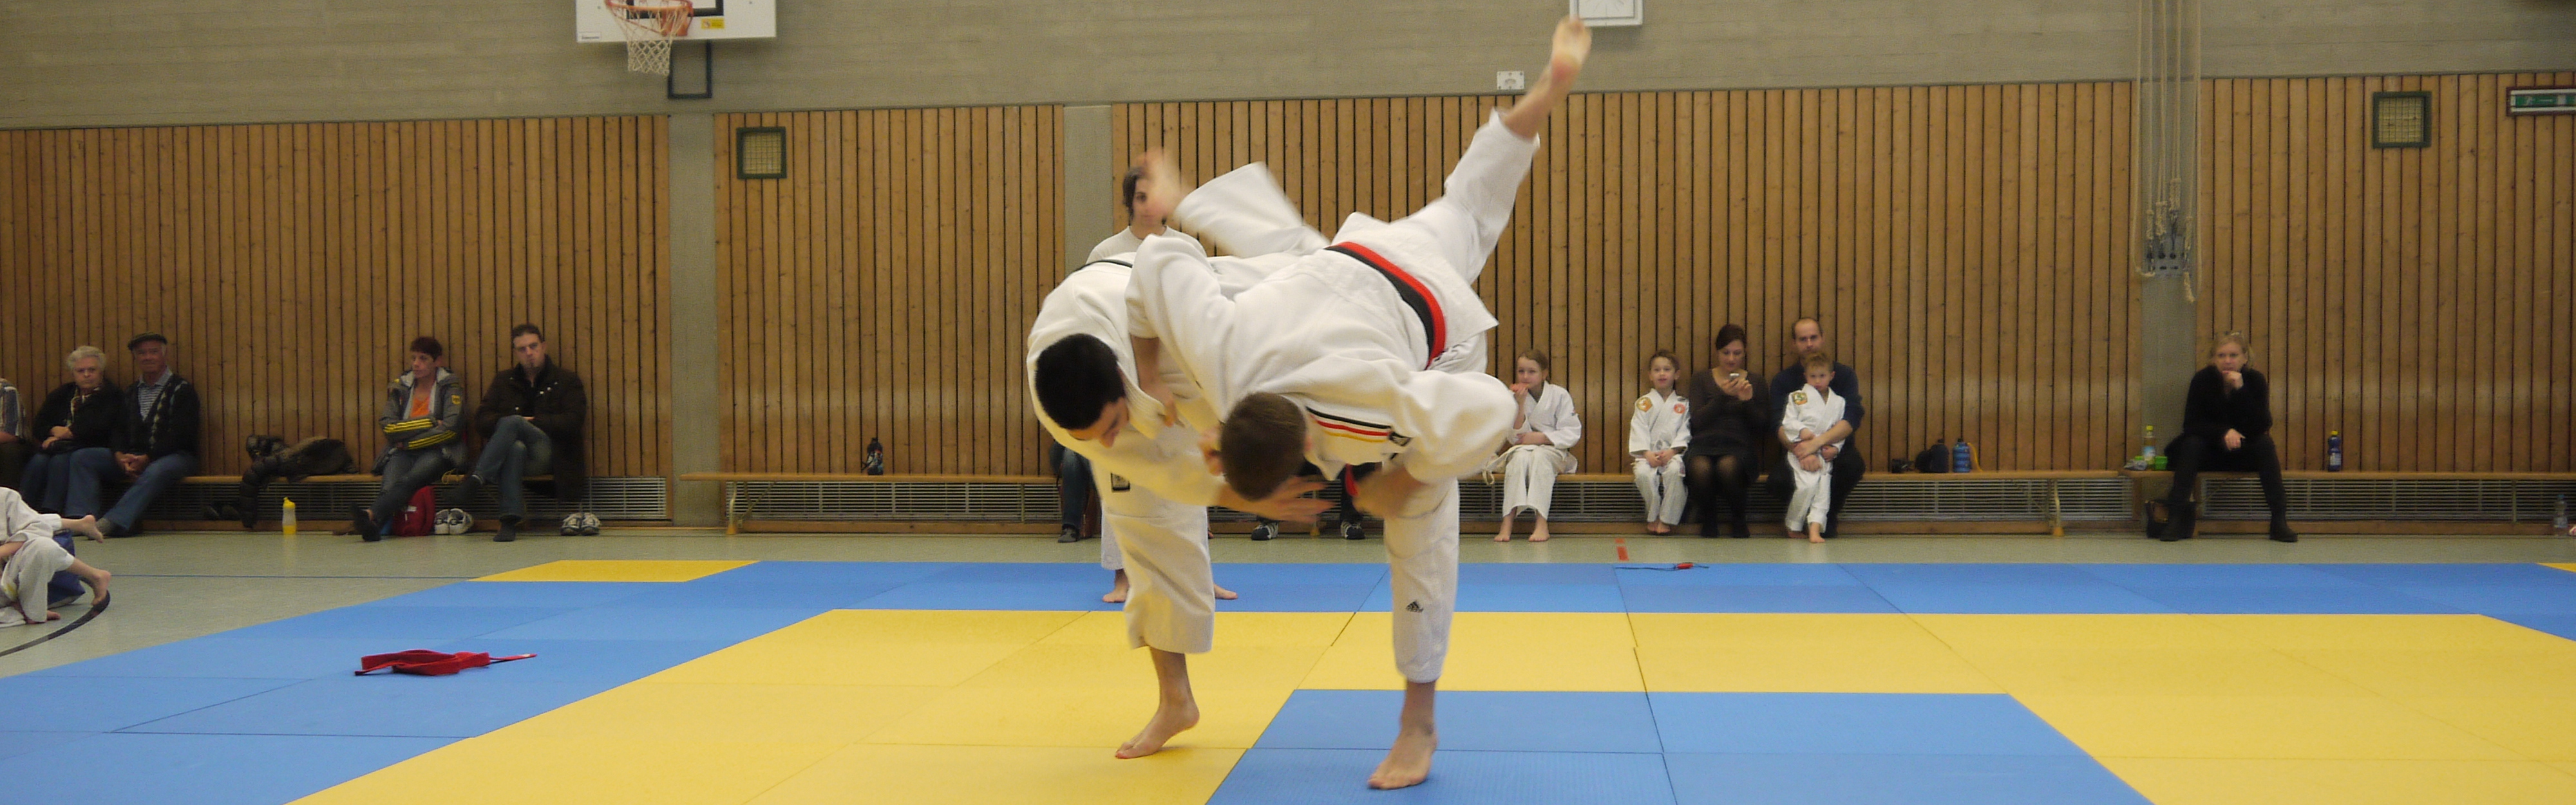 Judo-Wurf